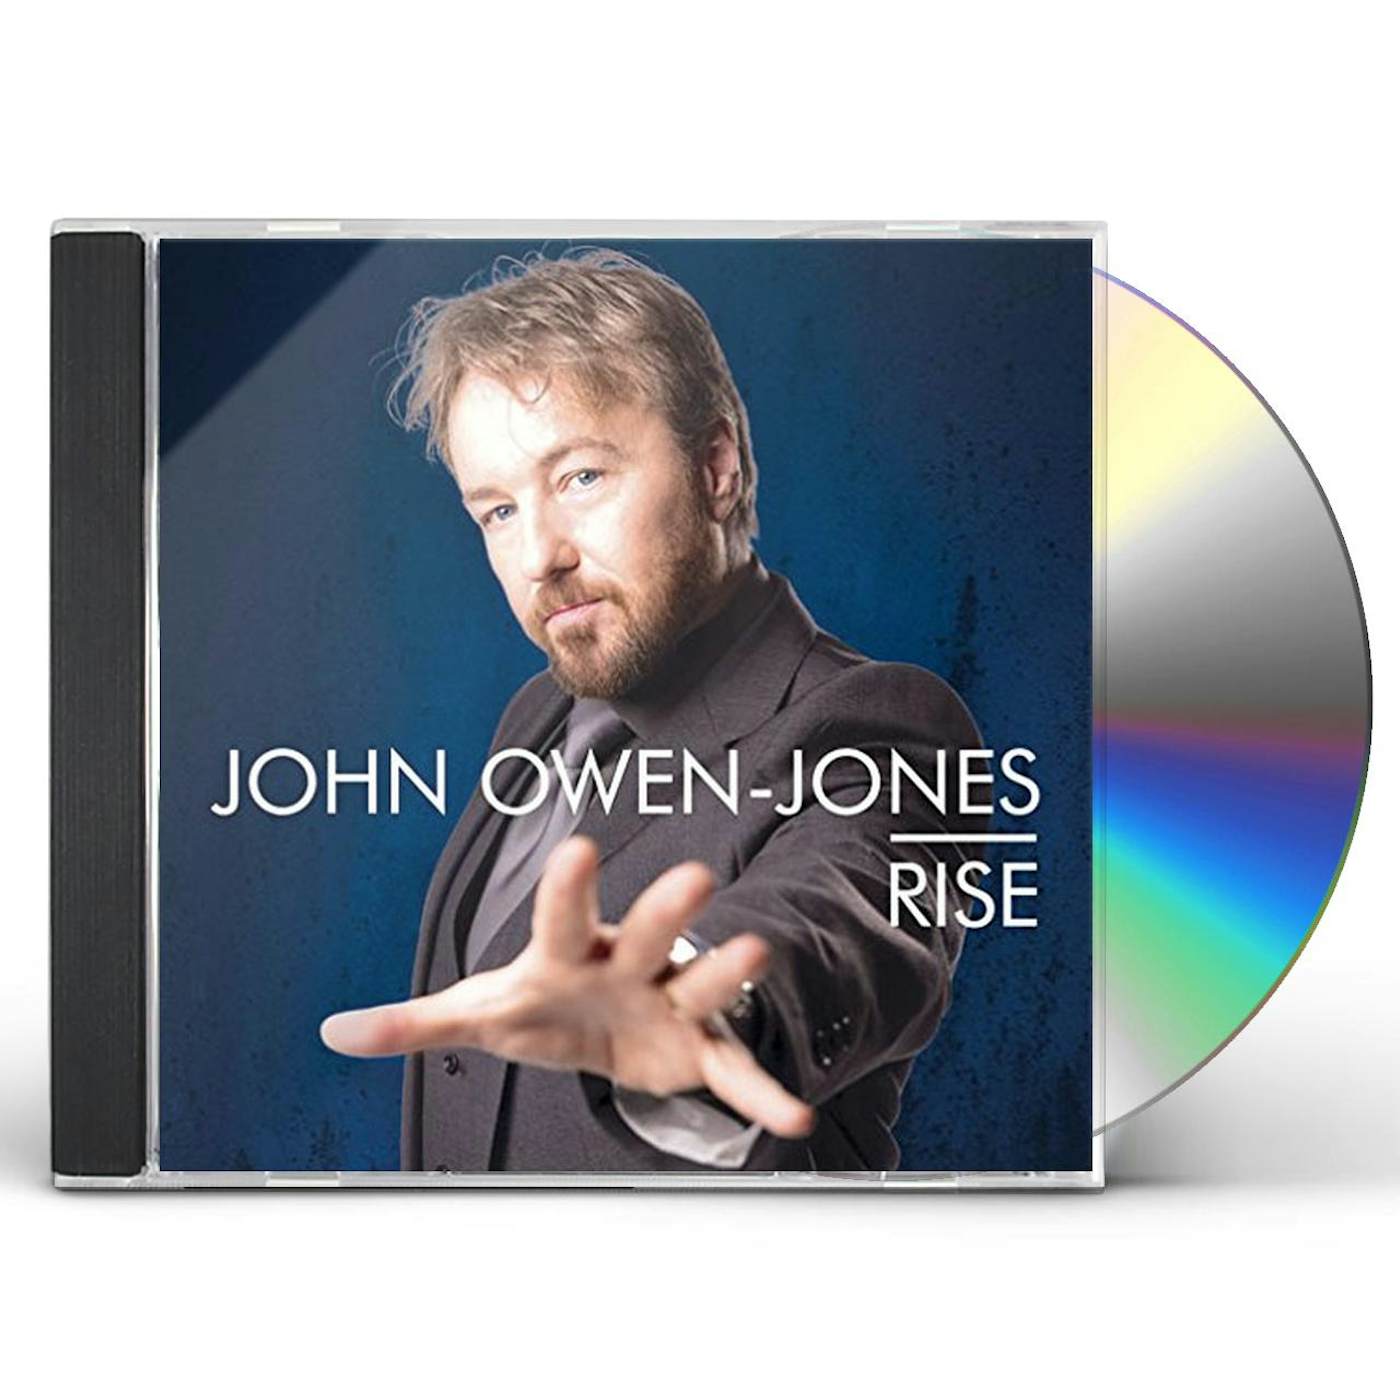 John Owen-Jones RISE CD